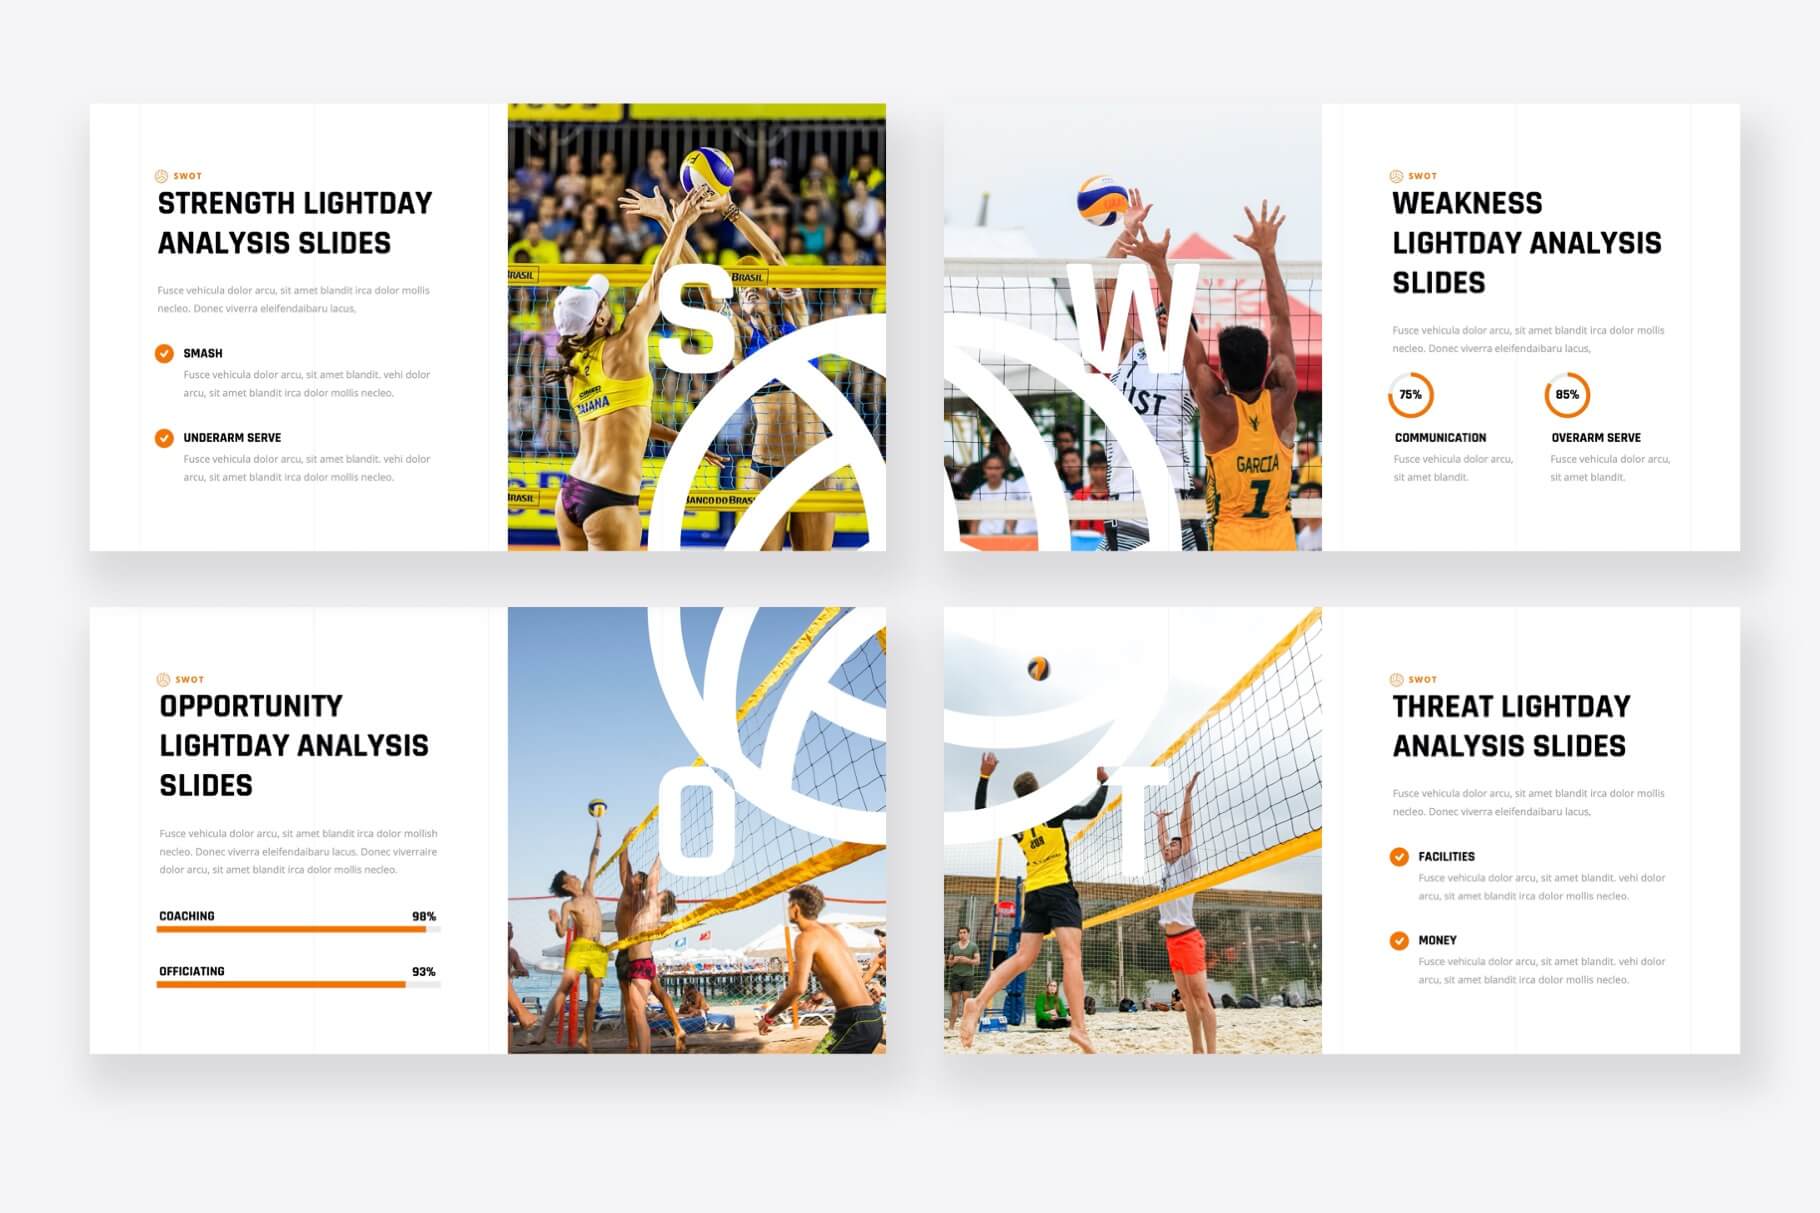 LIGHTDAY Volleyball Sport Google Slides Template MasdikaStudio